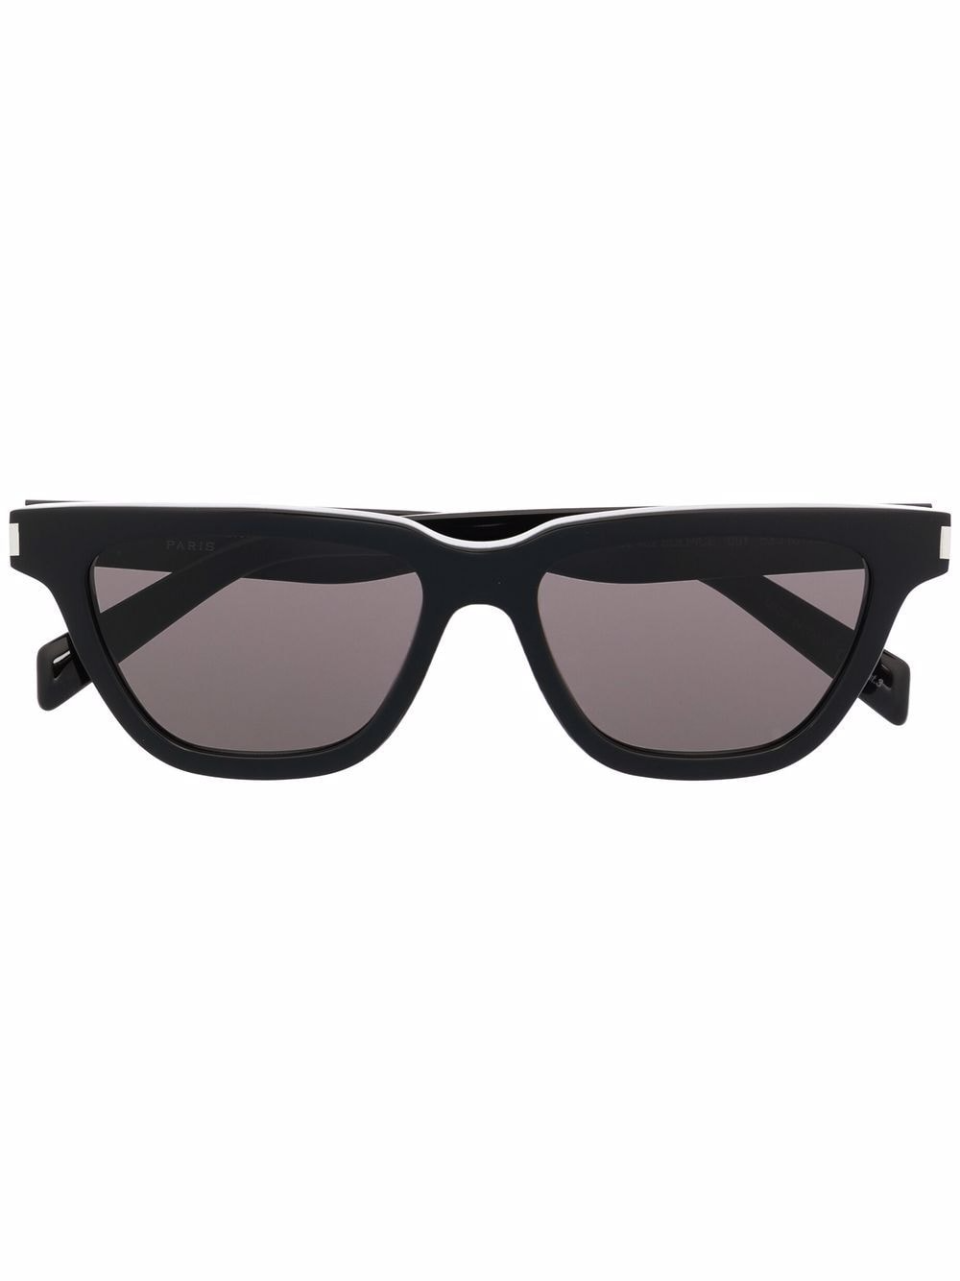 Saint Laurent Eyewear SL 462 Sulpice D-frame Sunglasses